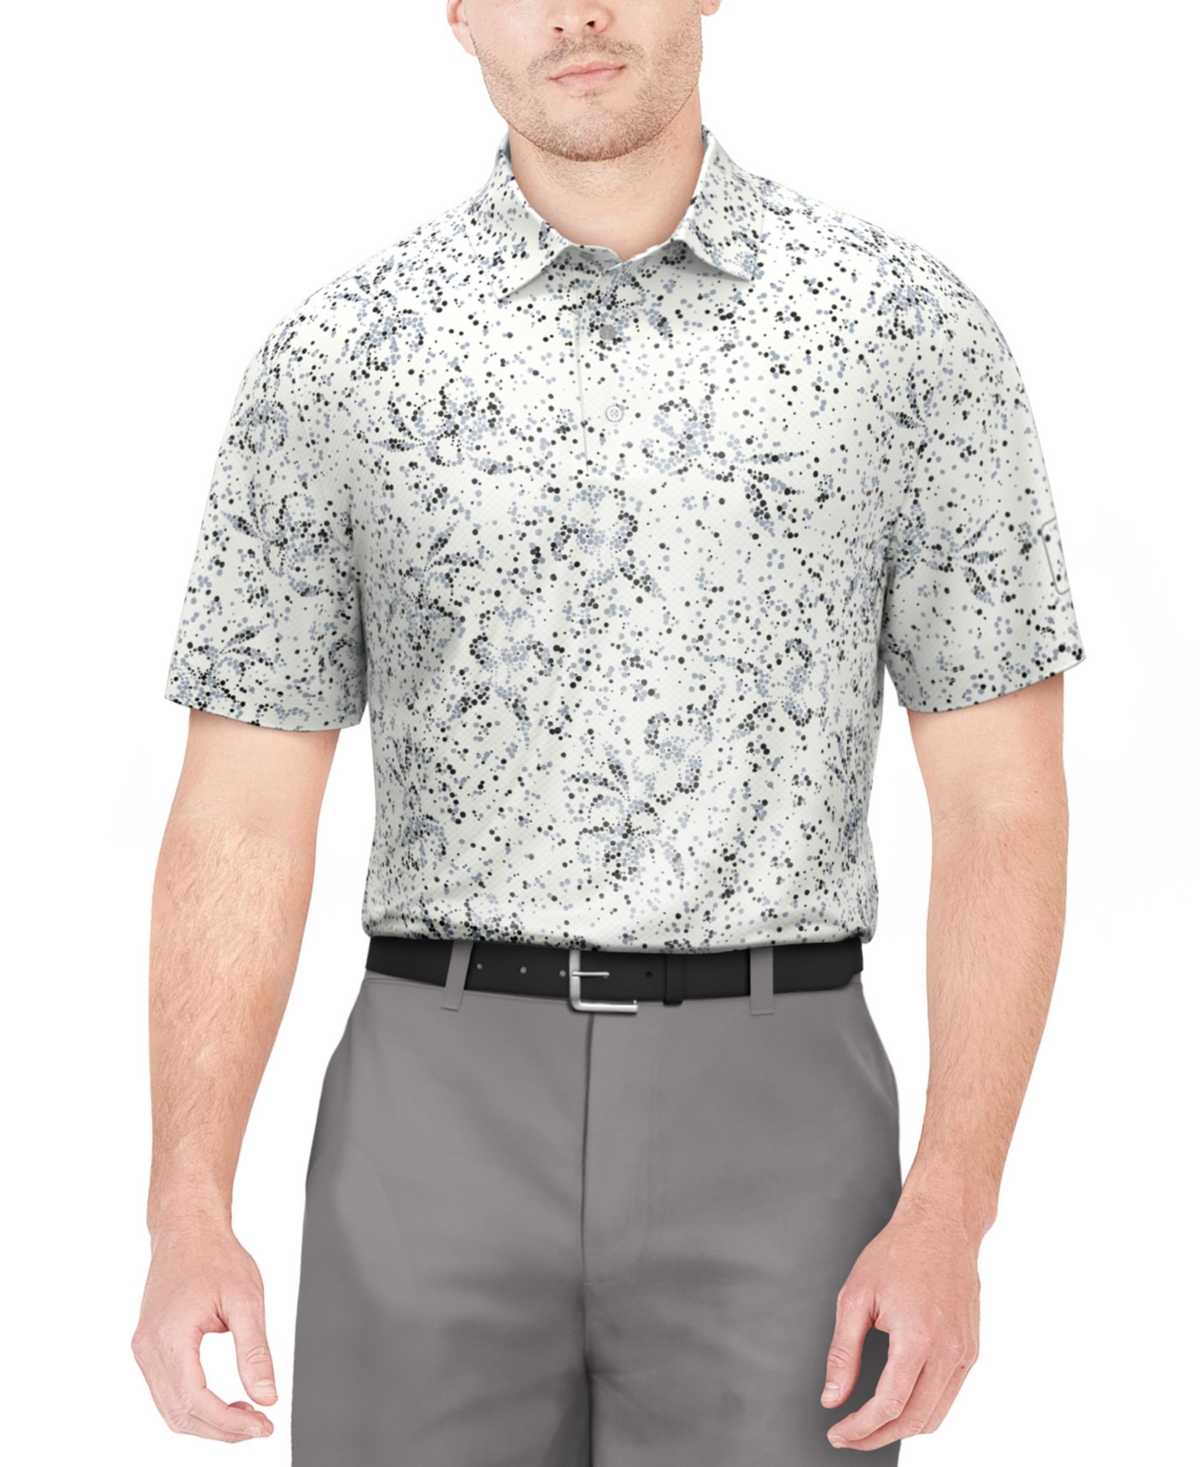 Men's Clustered Confetti Short Sleeve Performance Golf Polo Shirt - Iron Gate/